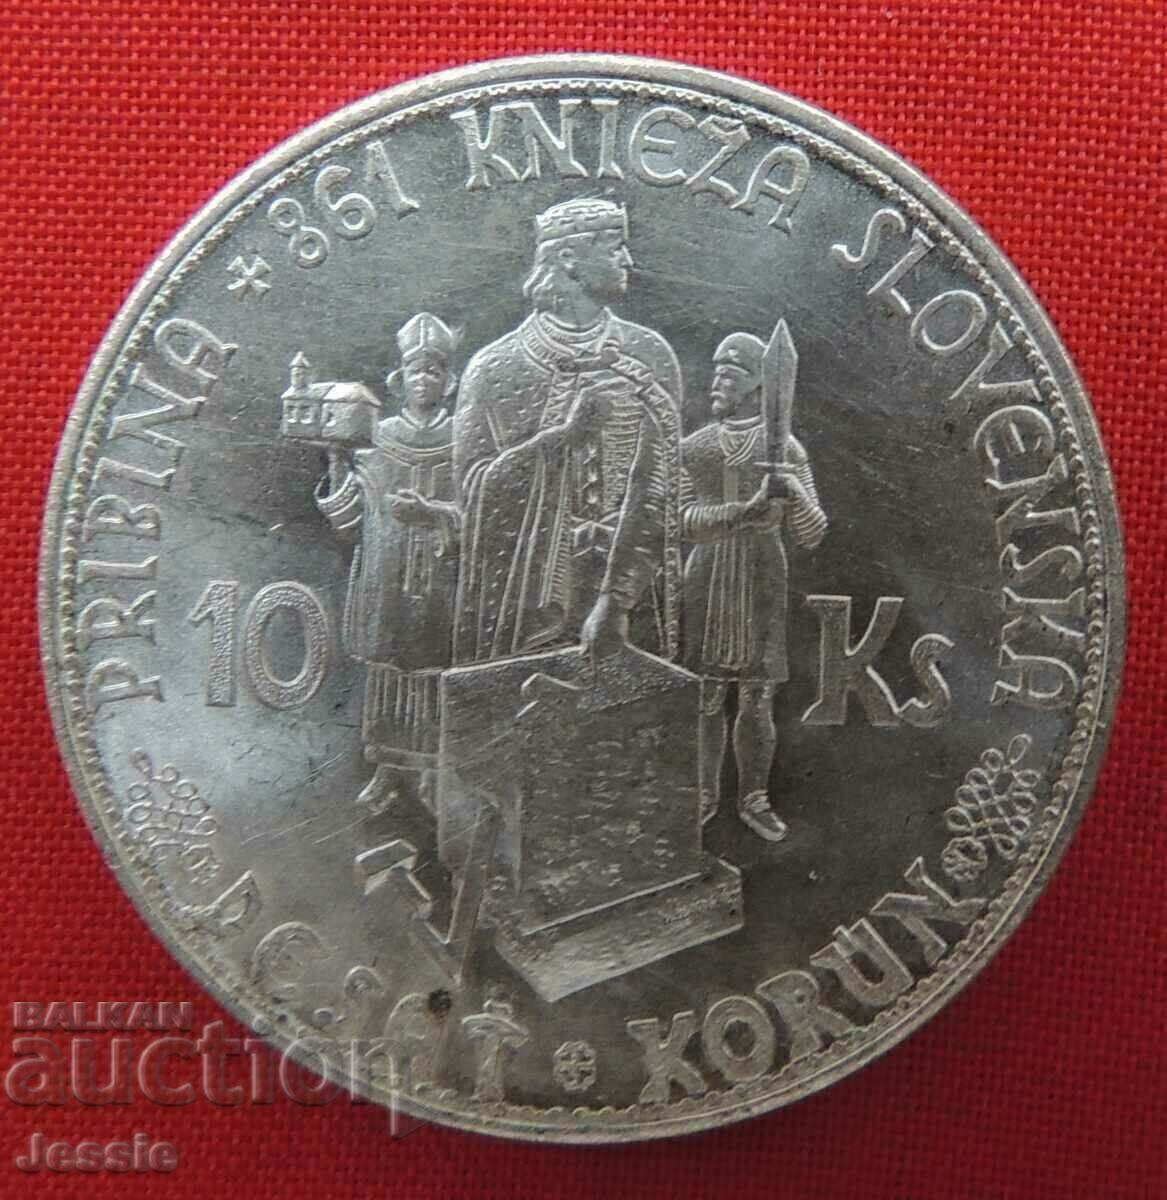 10 coroane 1944 Slovacia argint MINT